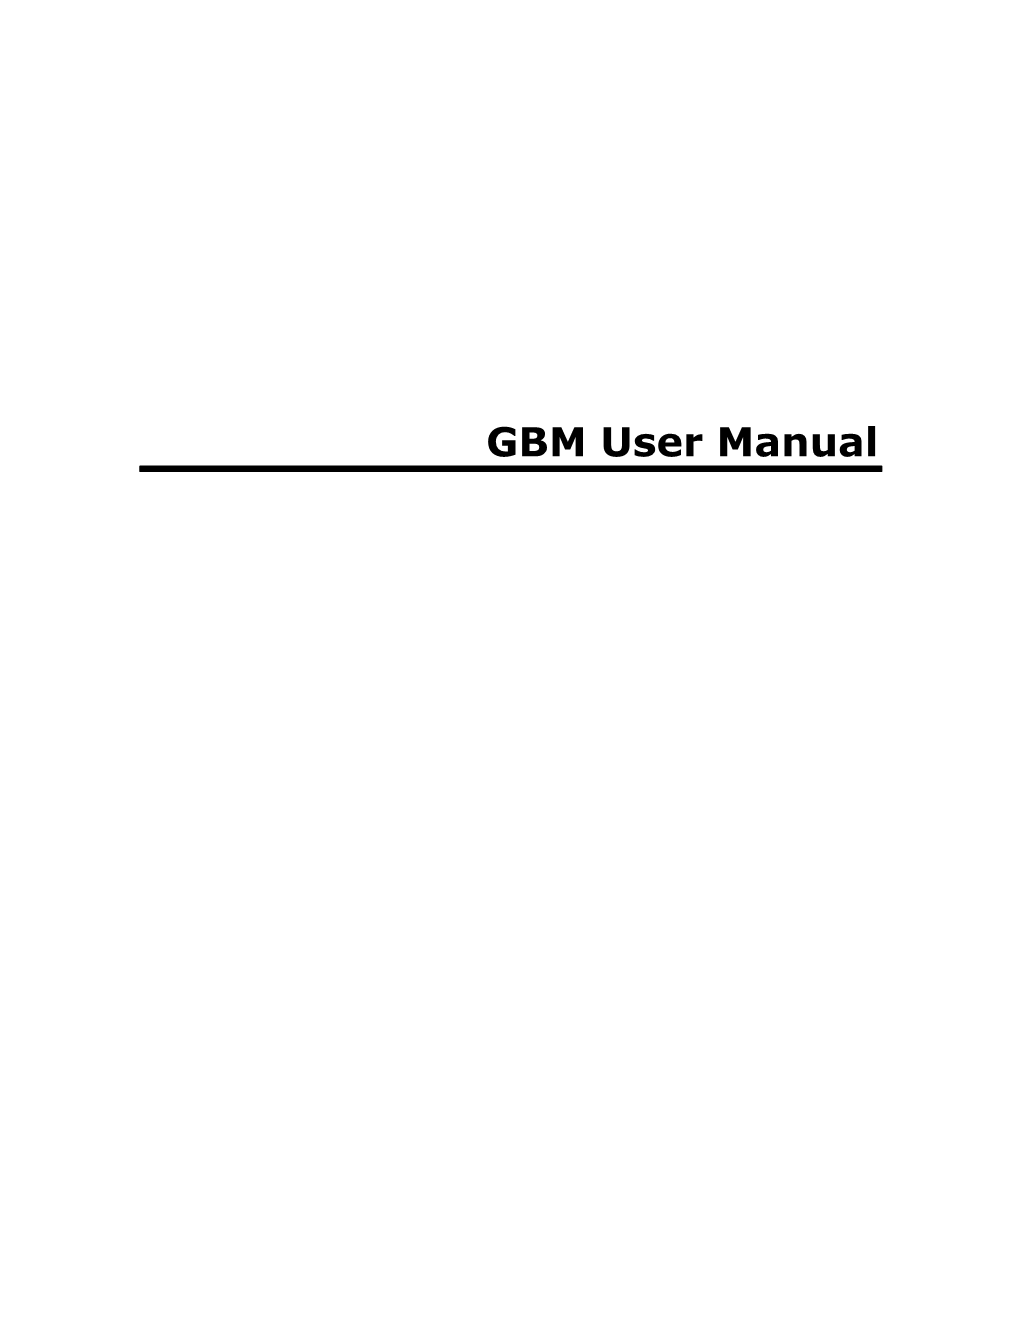 GBM User Manual